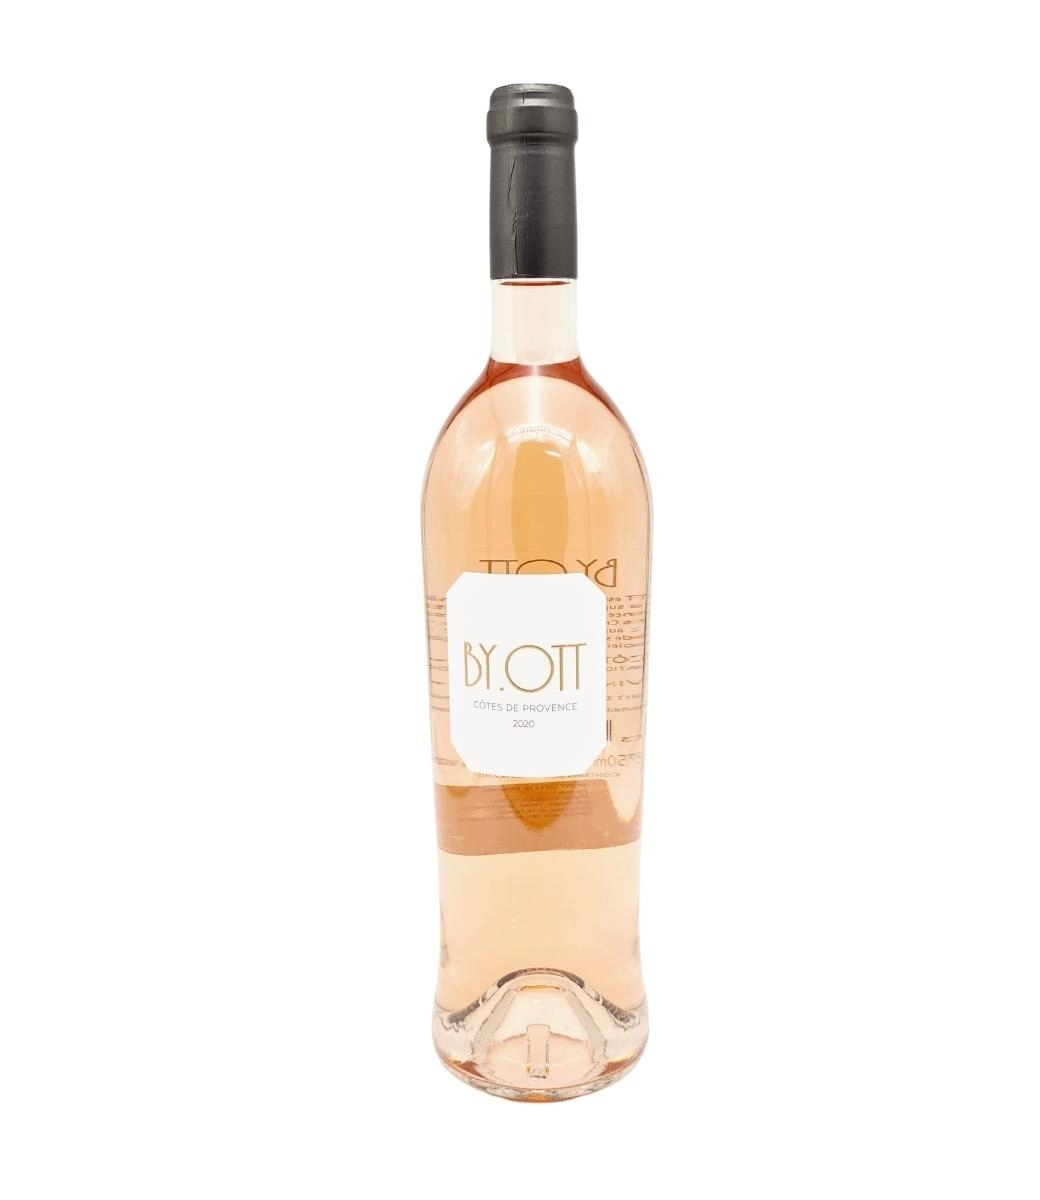 Vin rose BY OTT Provence 2020 0.75L 0